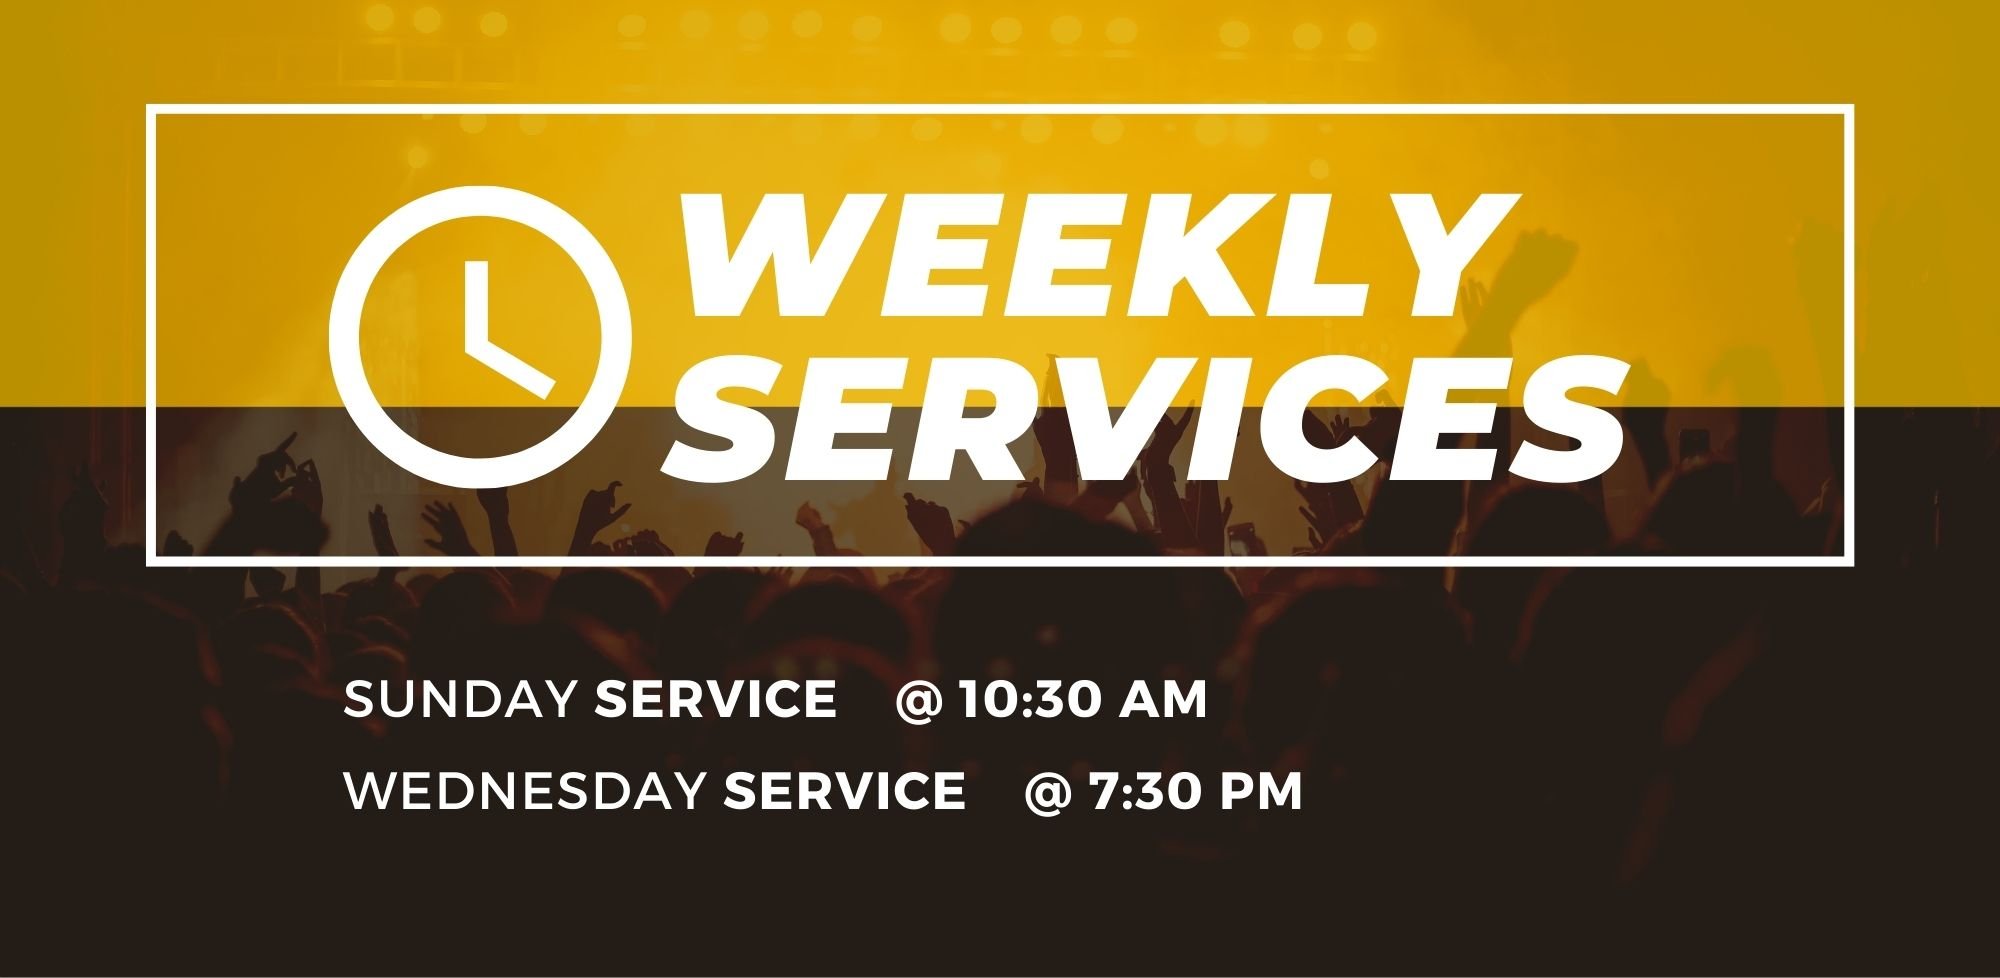 Weekly Services.jpg